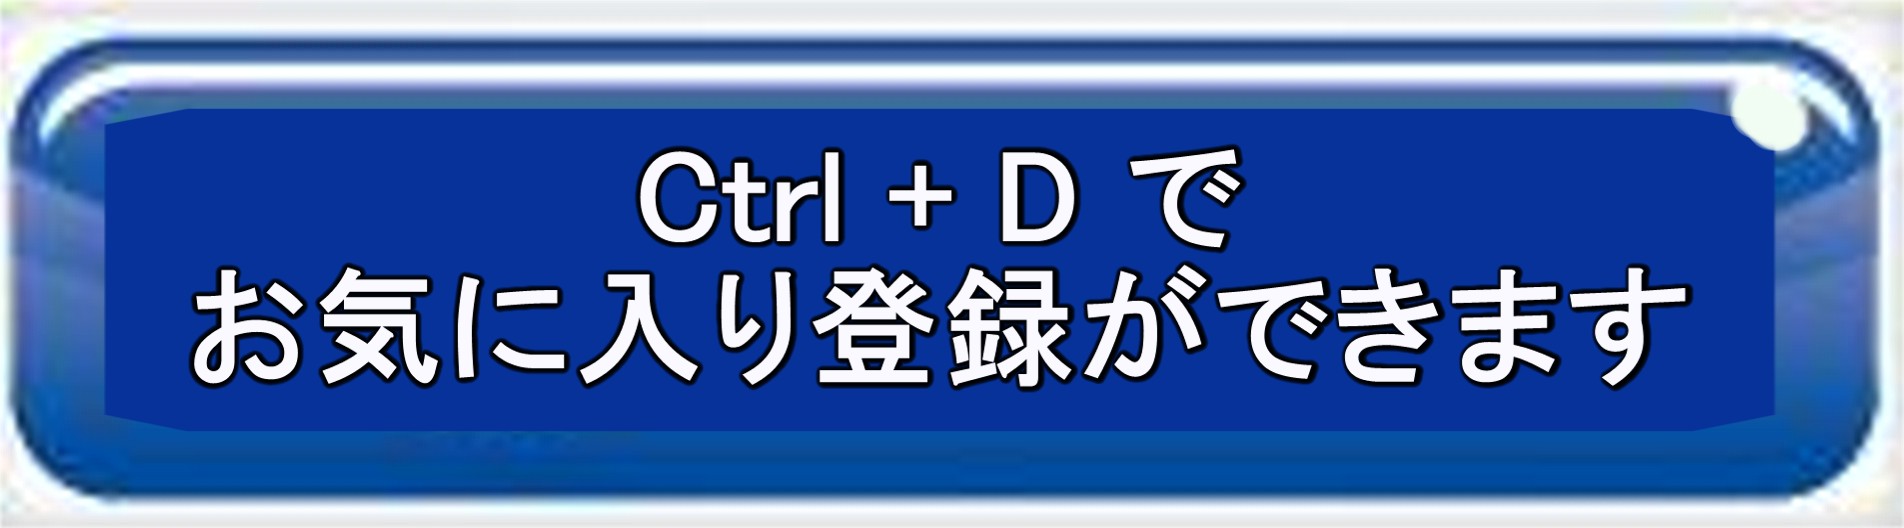 Ctrl + D łCɓo^